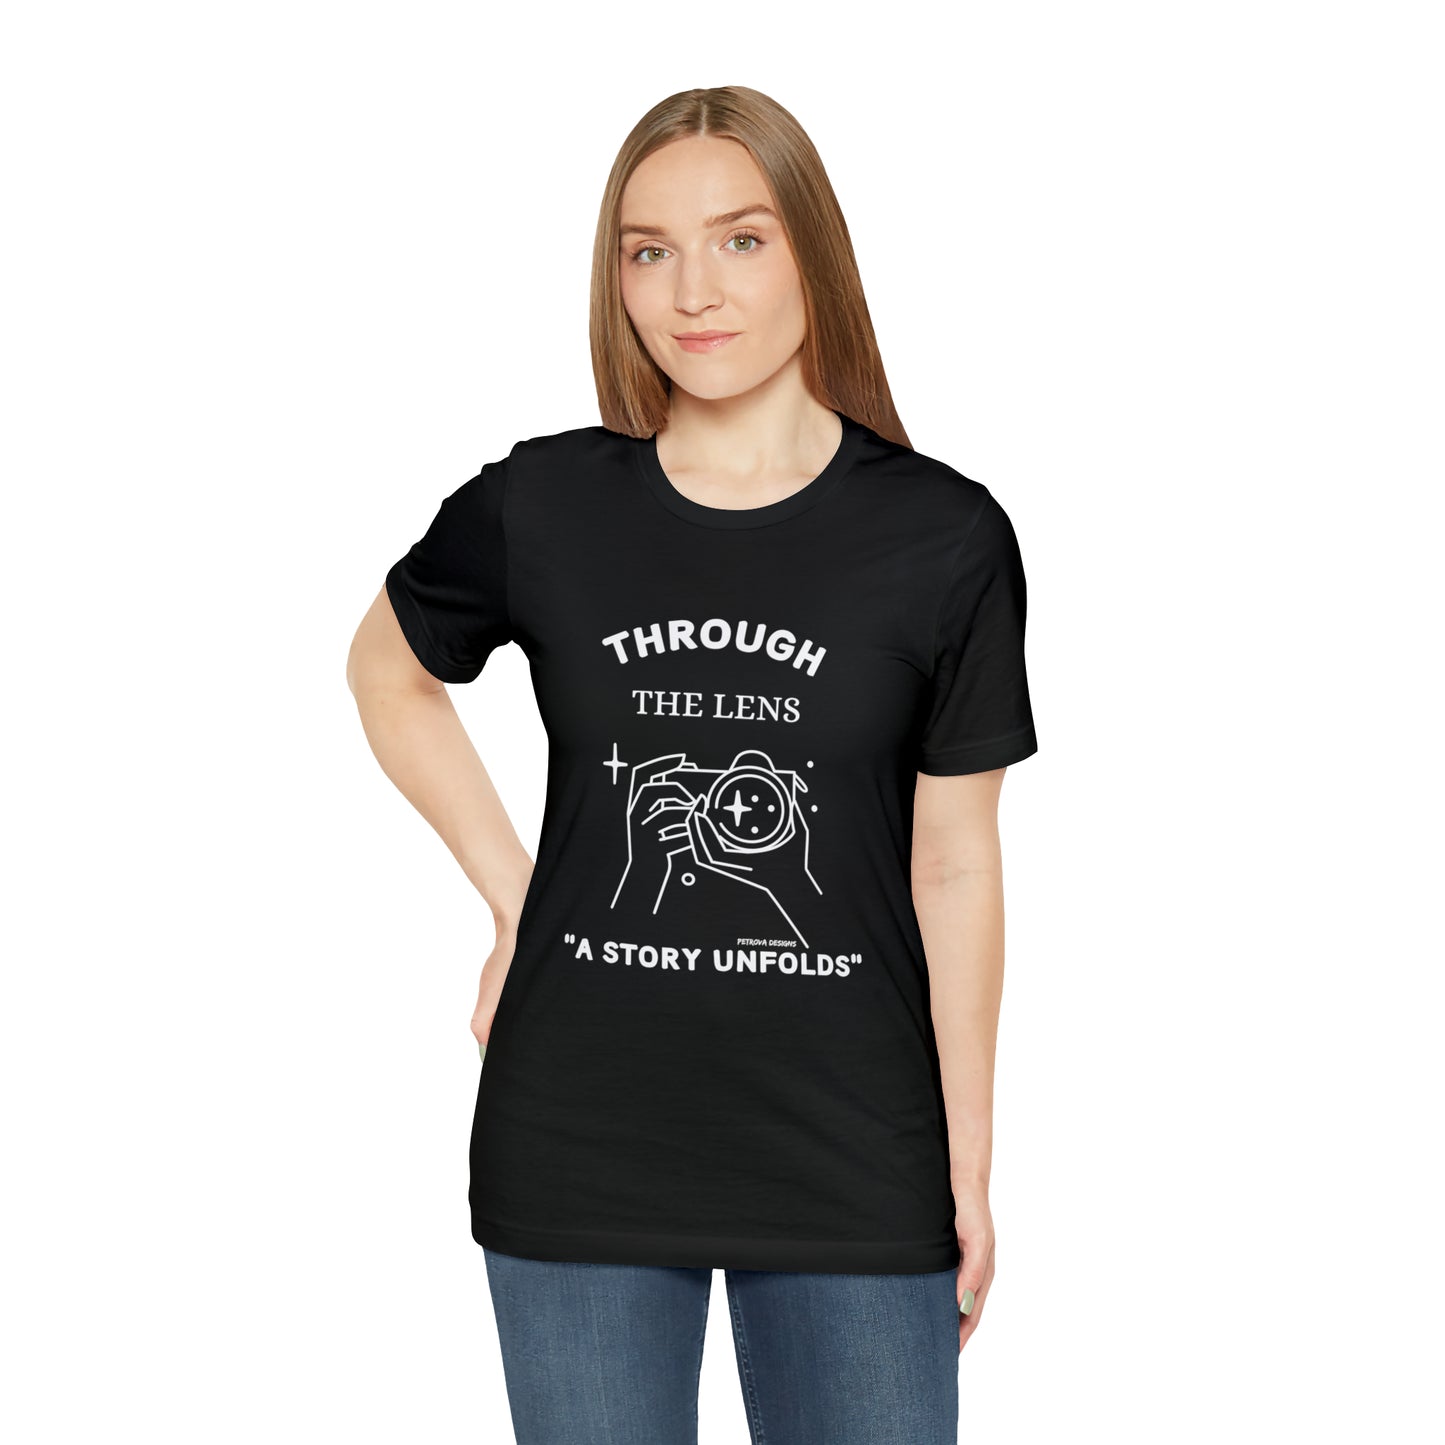 Black T-Shirt Tshirt Design Gift for Friend and Family Short Sleeved Shirt Petrova Designs